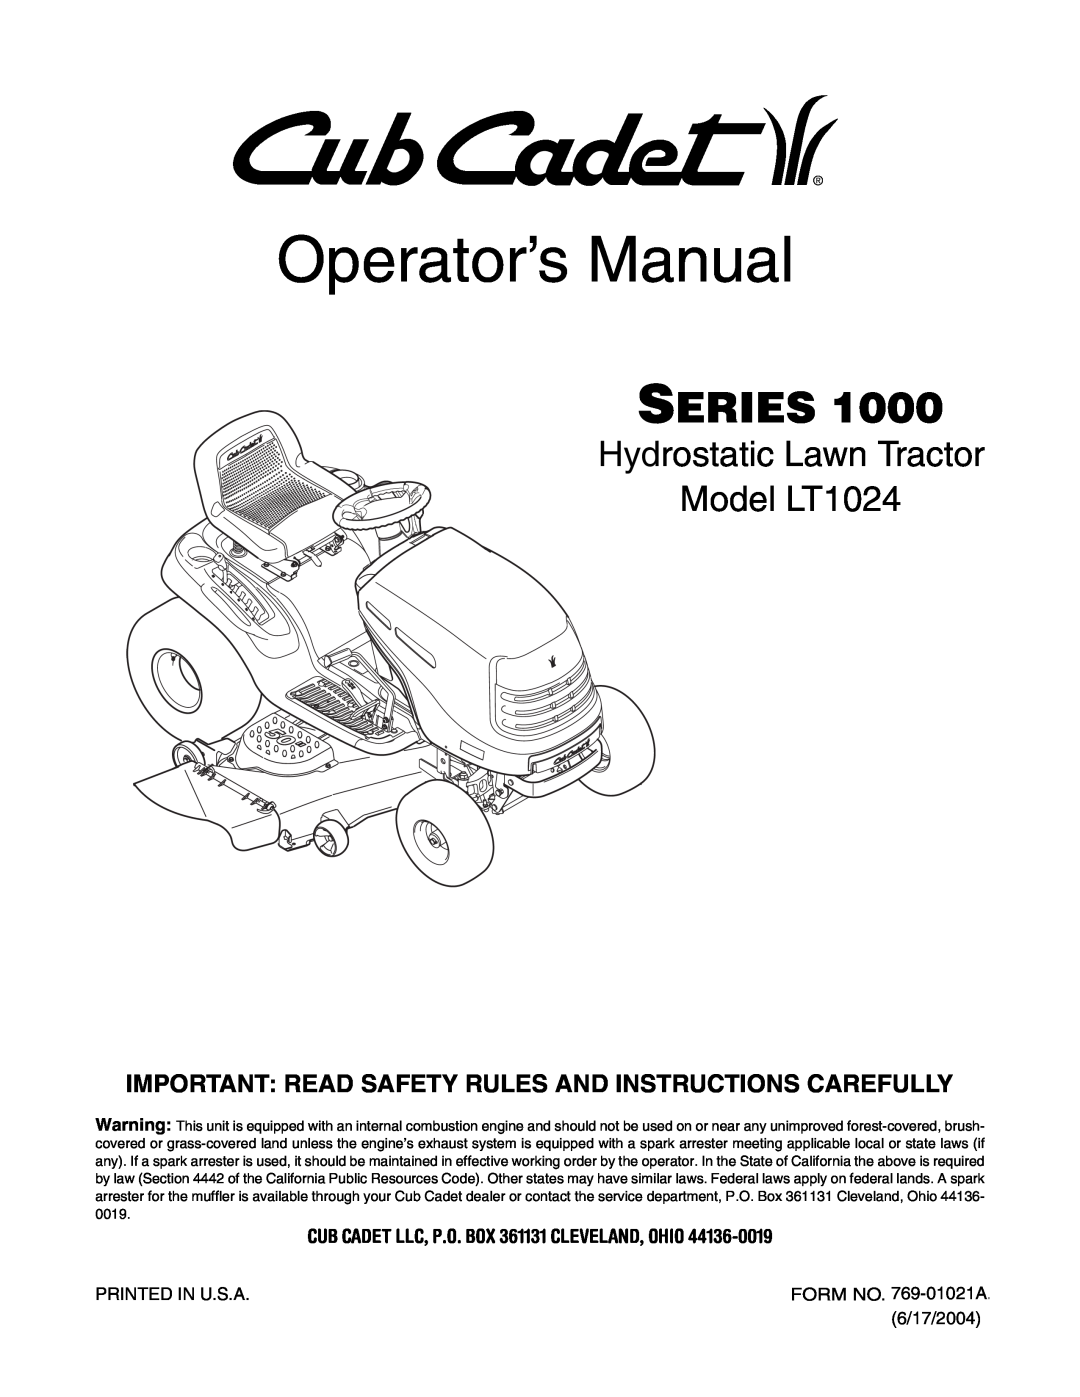 Bolens LT1024 manual CUB CADET LLC, P.O. BOX 361131 CLEVELAND, OHIO, Operator’s Manual, Series 